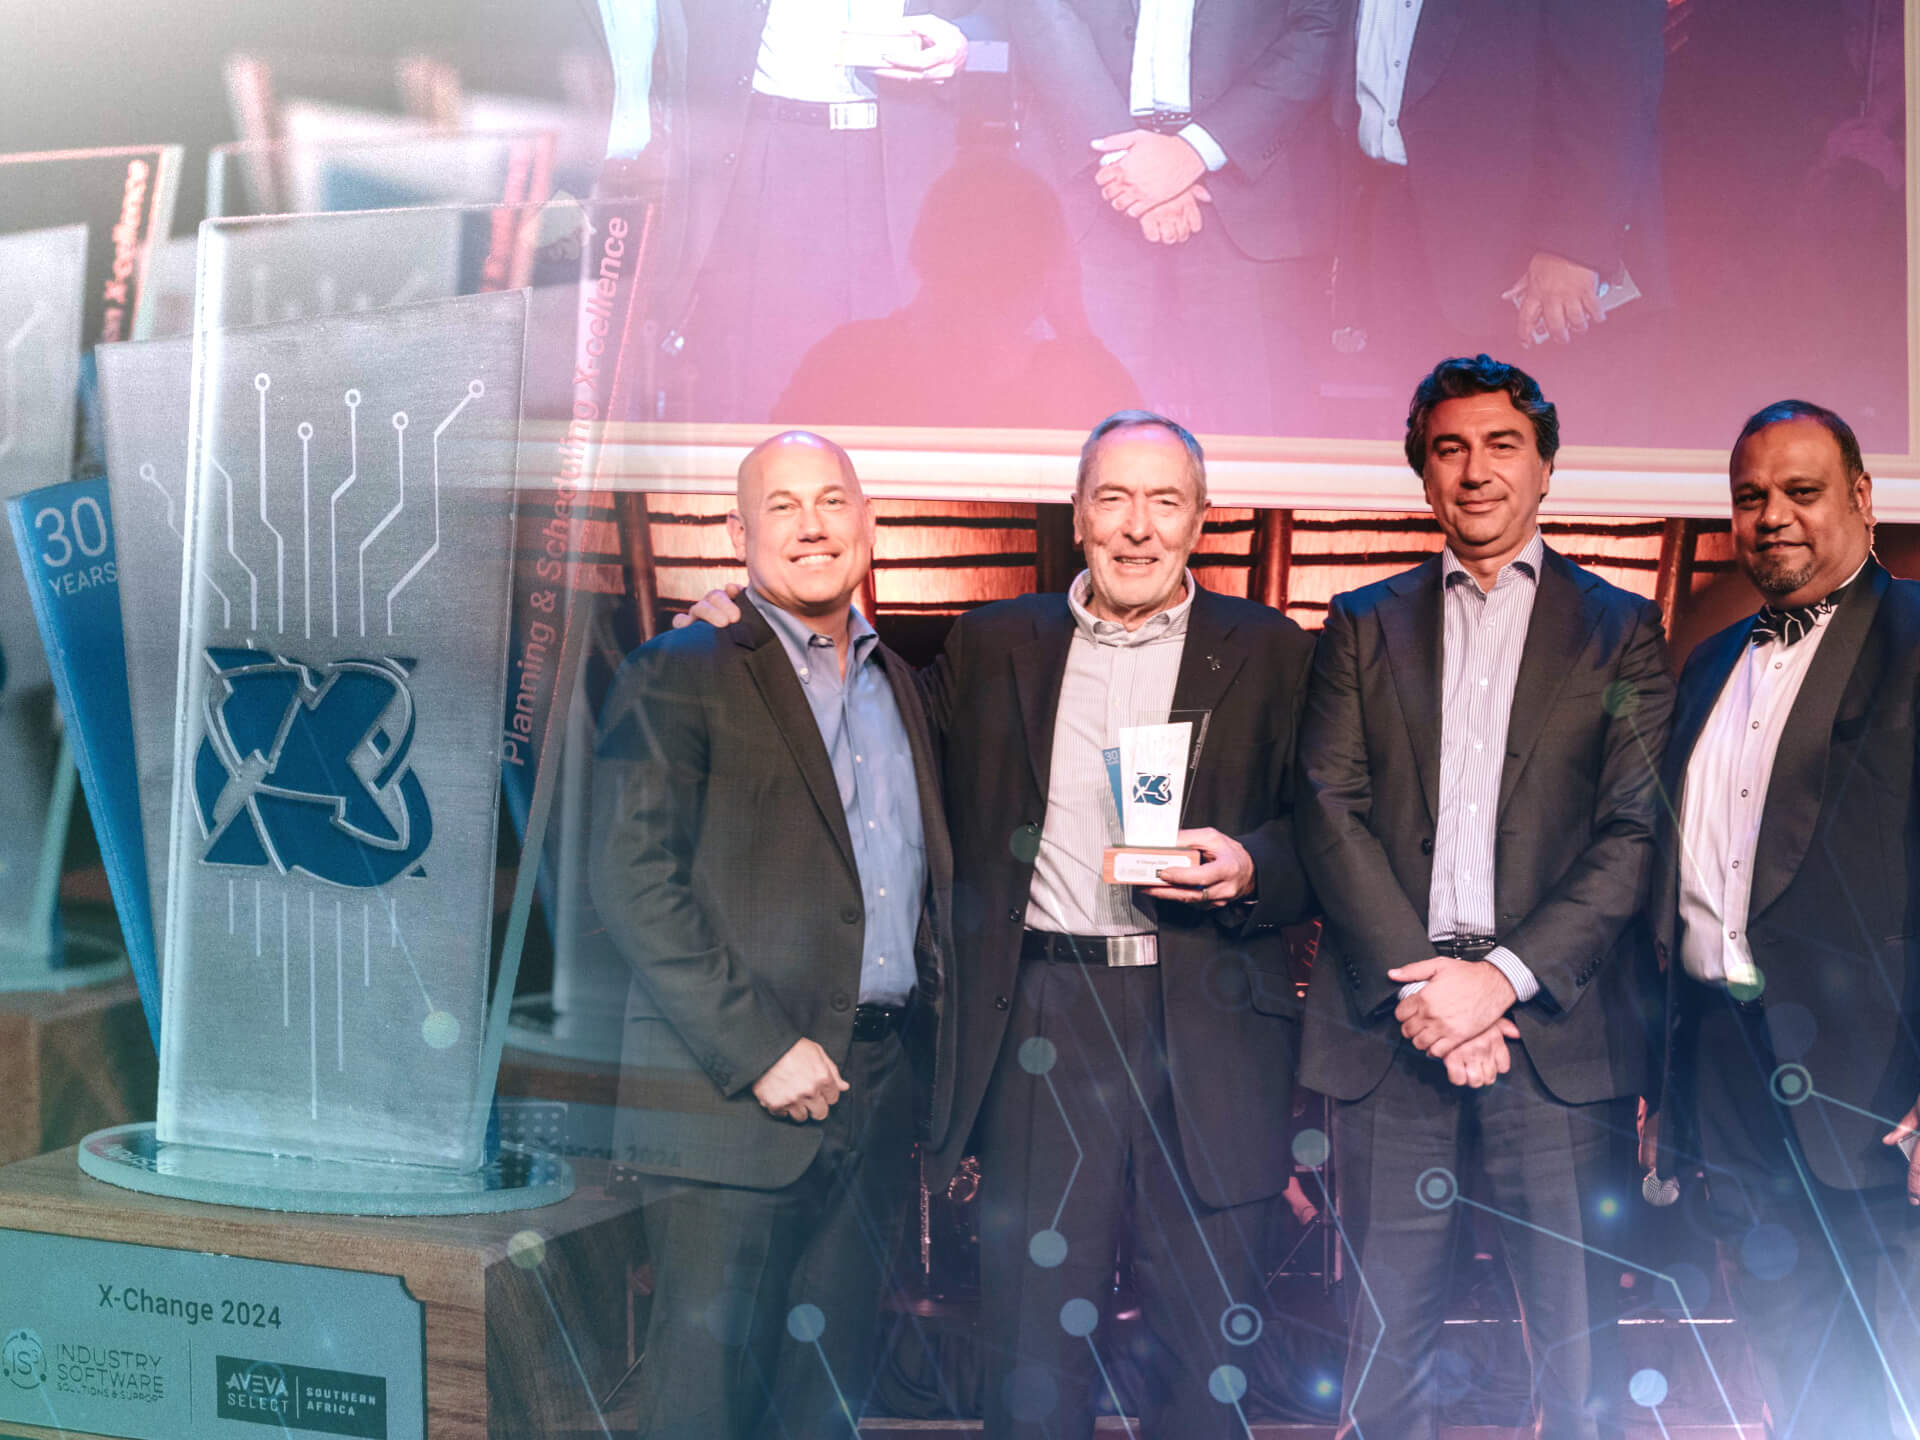 ABinBev earns top honours for software implementation at XChange